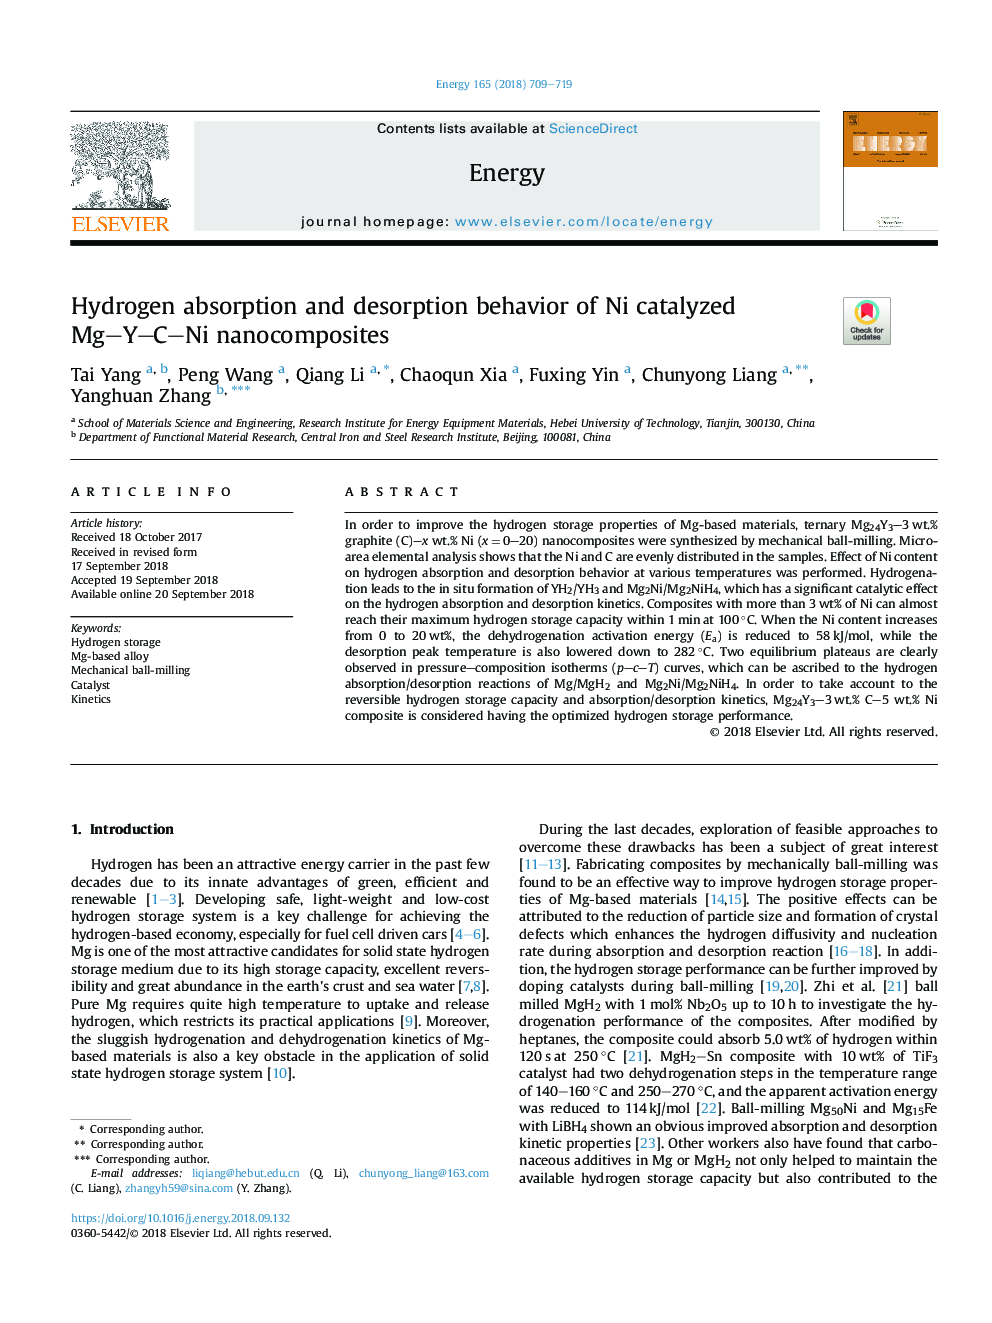 Hydrogen absorption and desorption behavior of Ni catalyzed Mg-Y-C-Ni nanocomposites